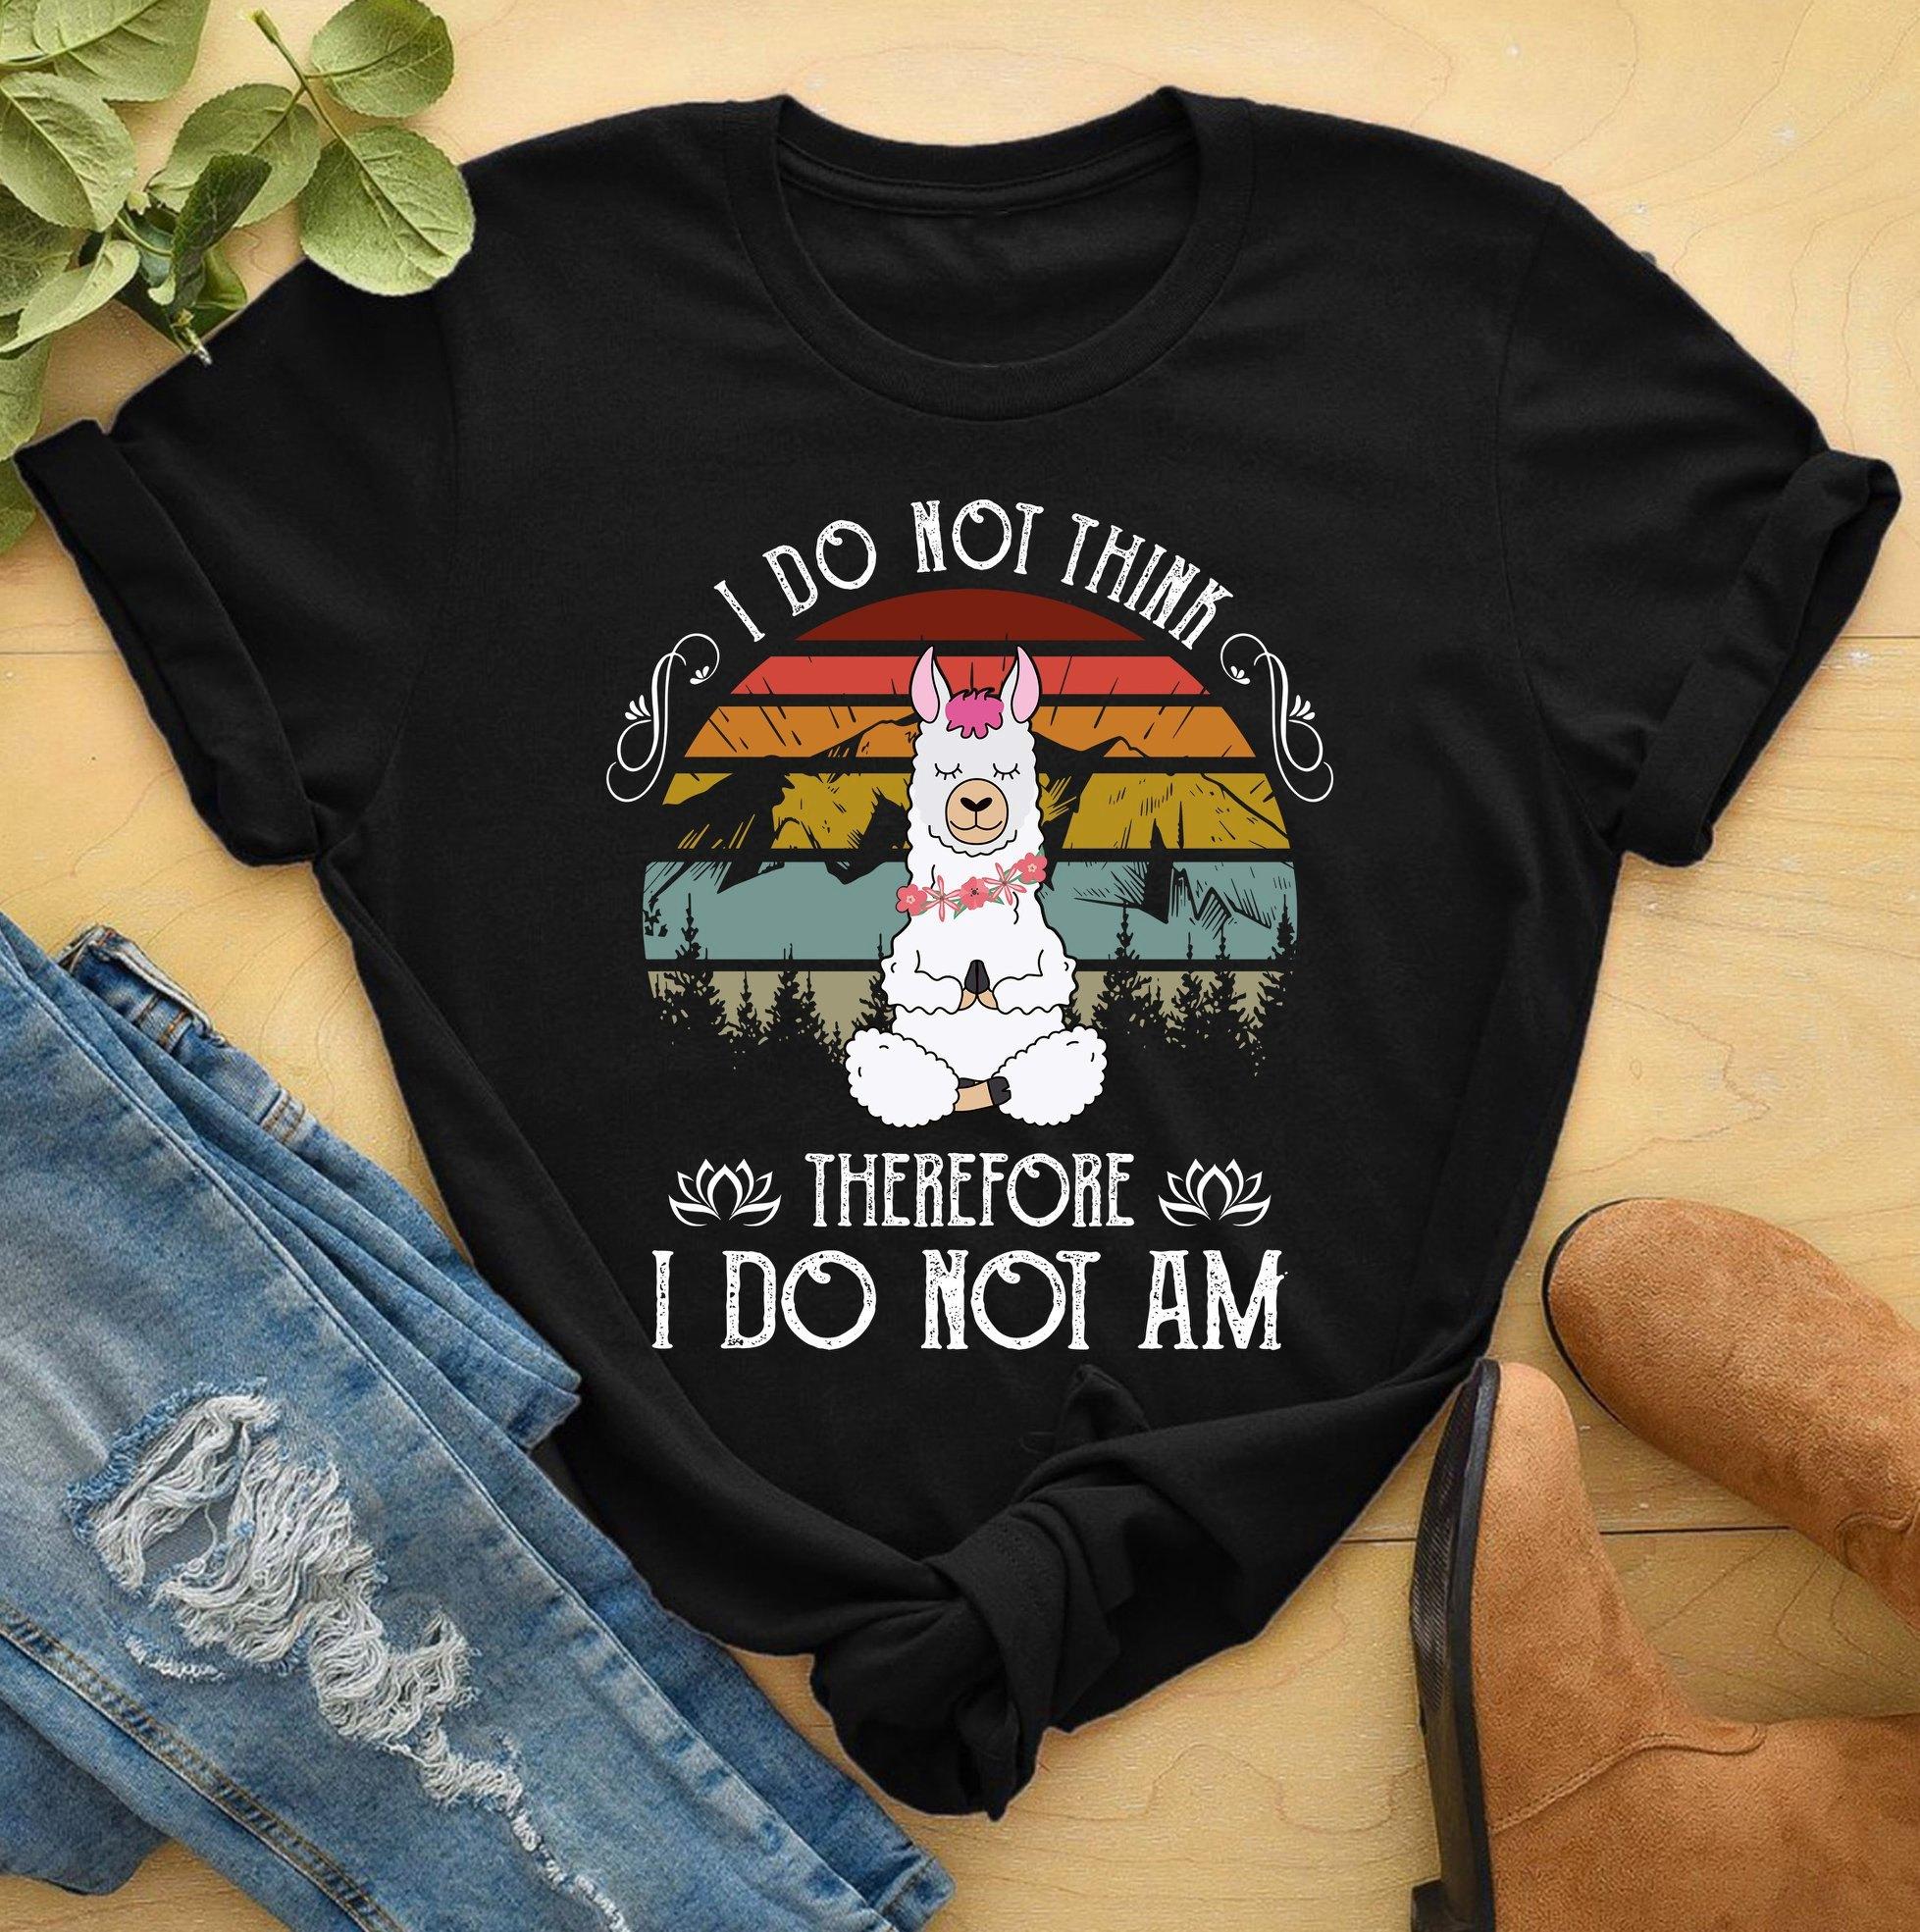 Yoga Llama - I do not think therefore i do not am